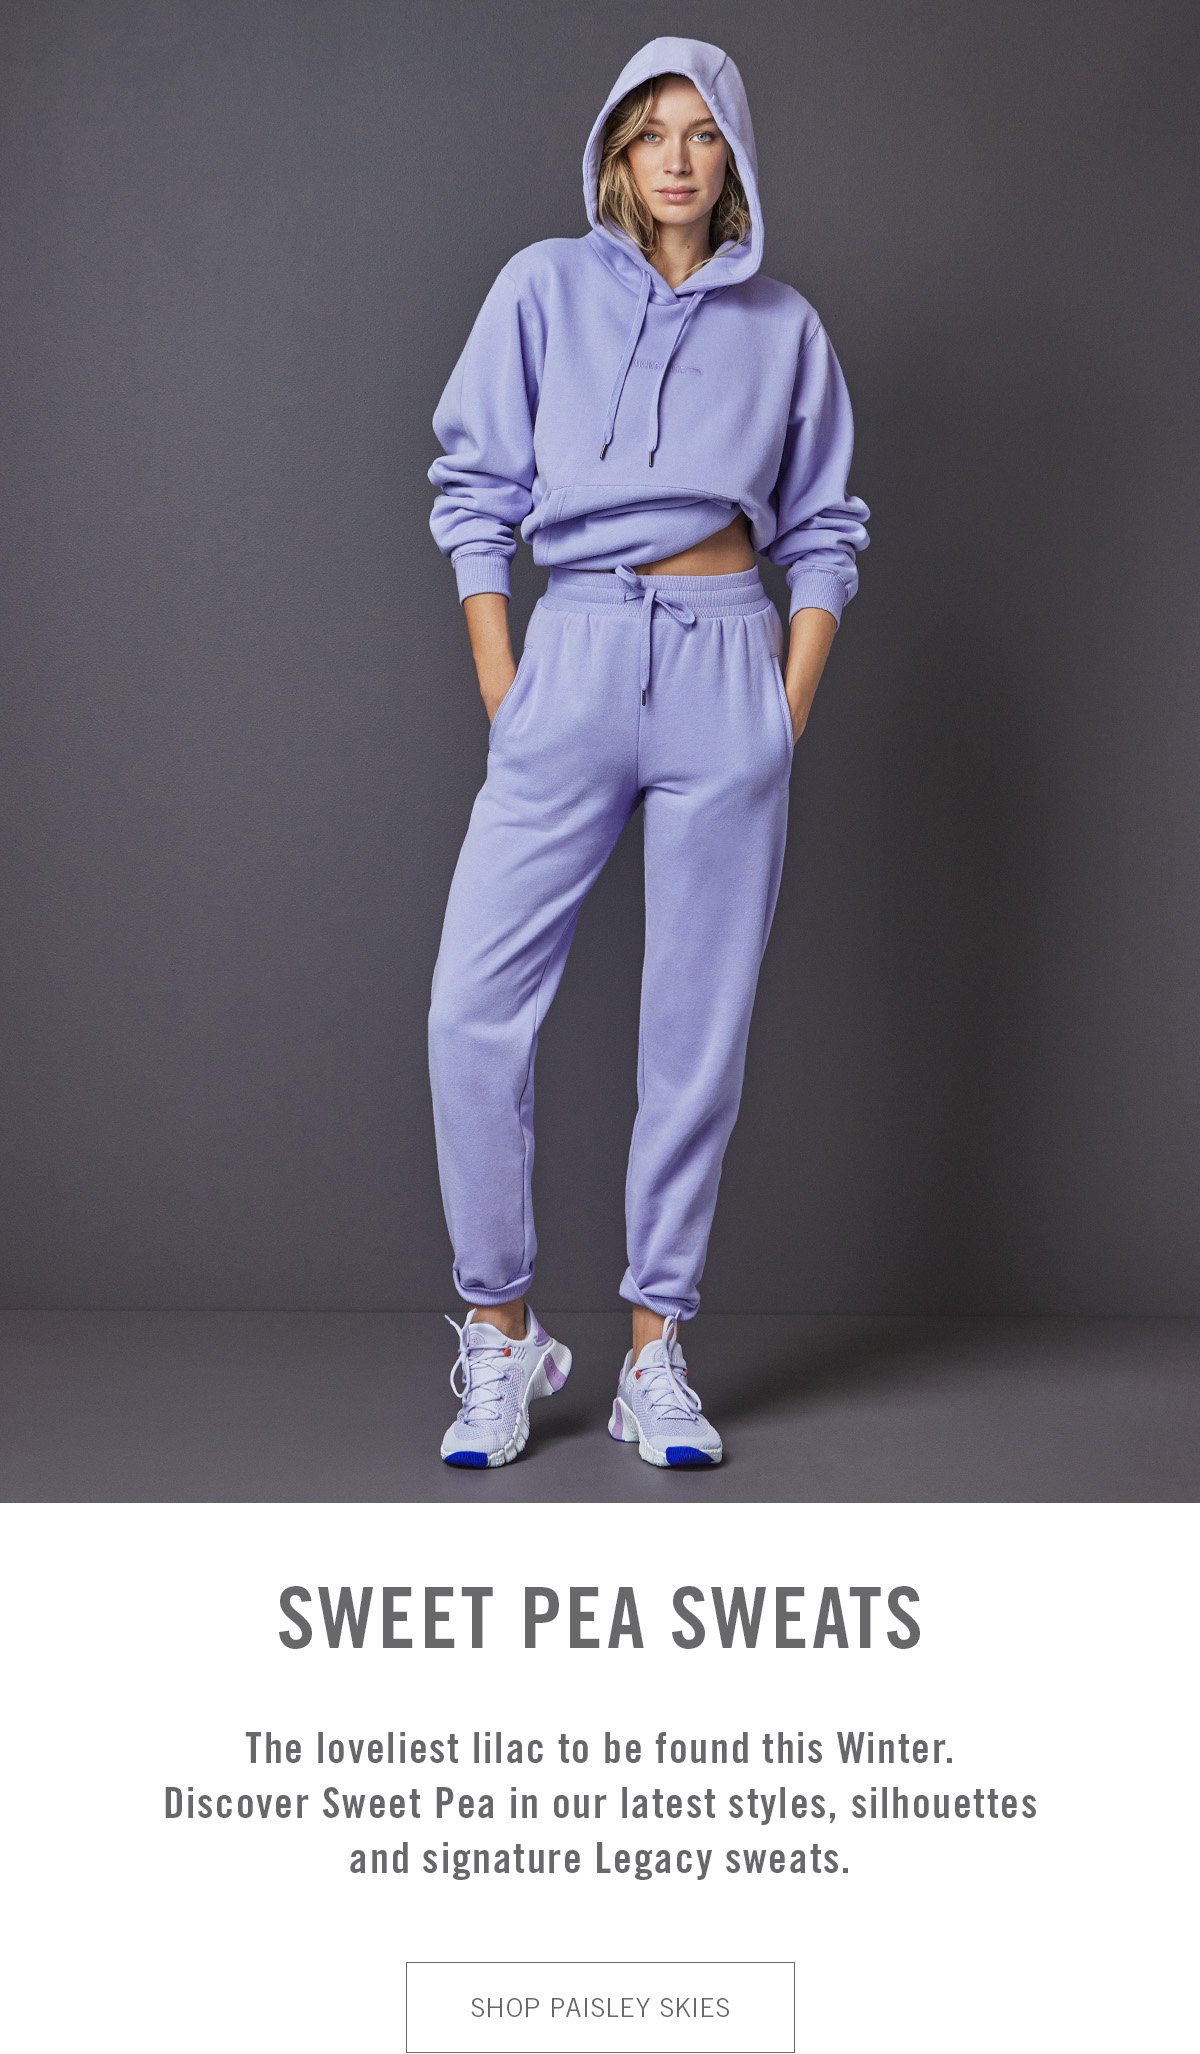 Sweet Pea Sweats